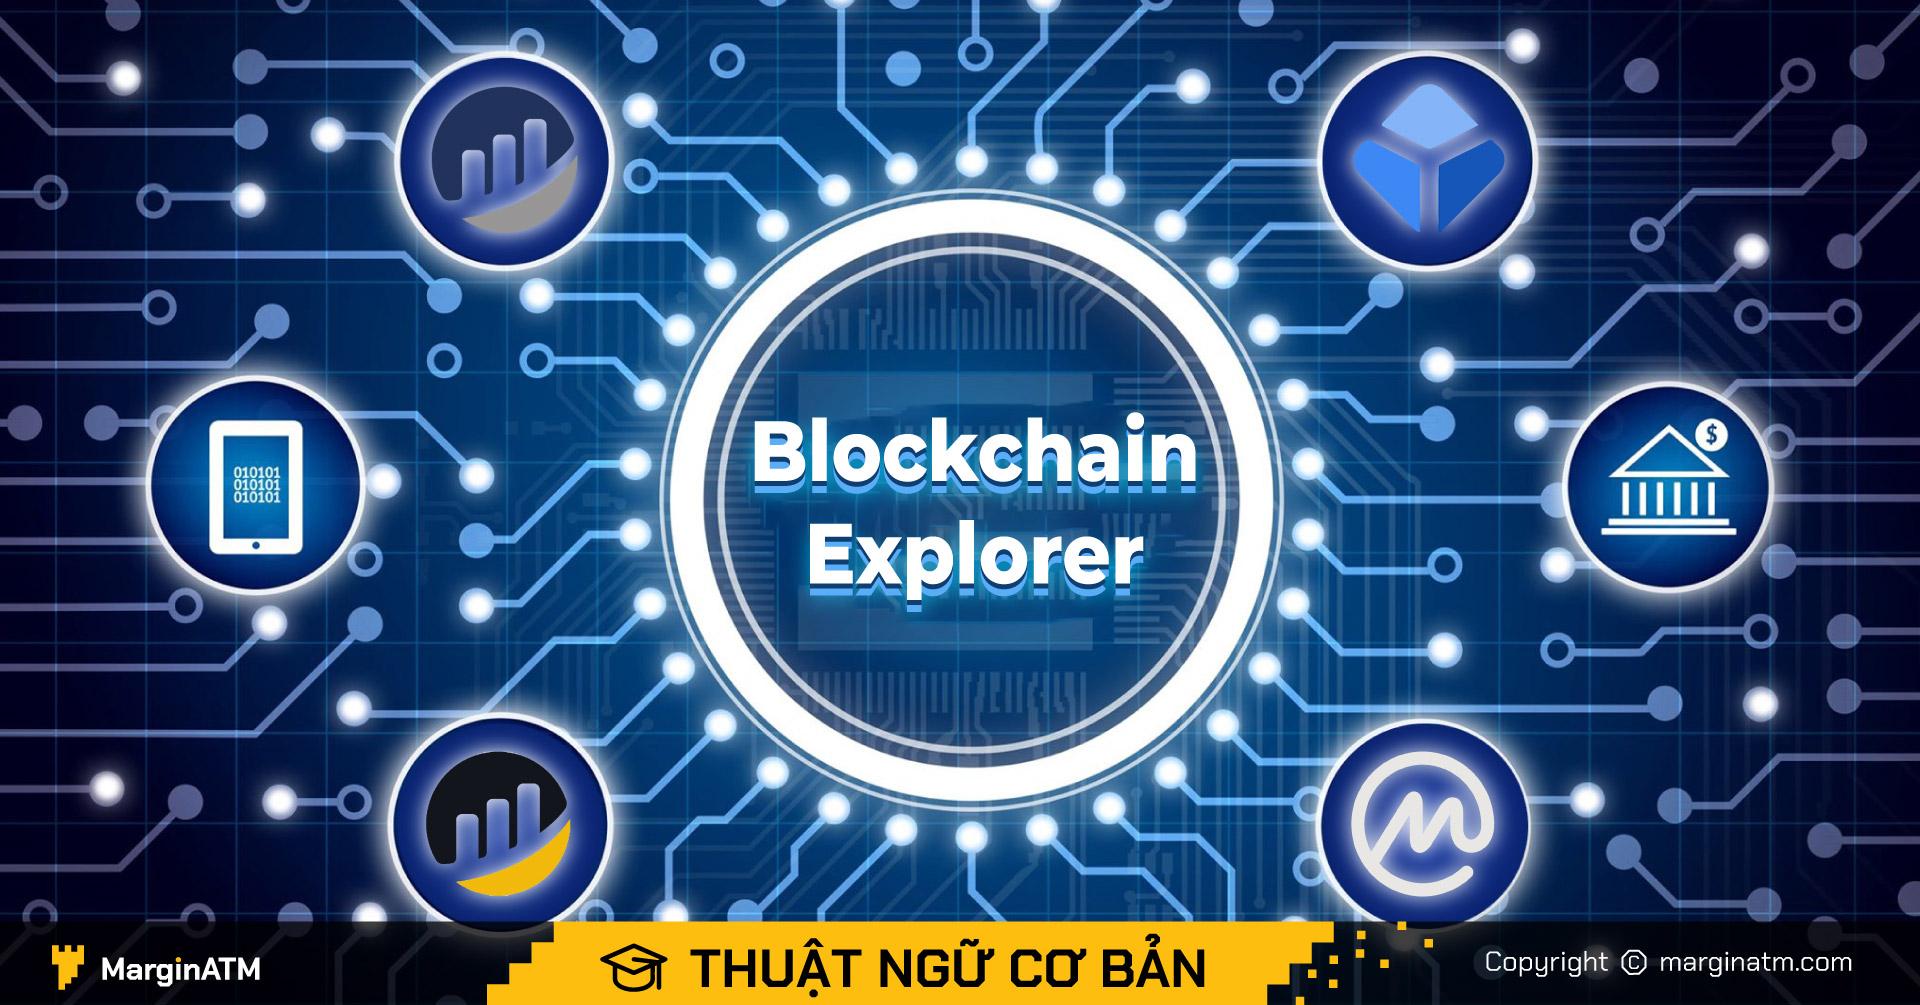 Blockchain Explorer là gì? Top 5 Blockchain Explorer phổ biến nhất